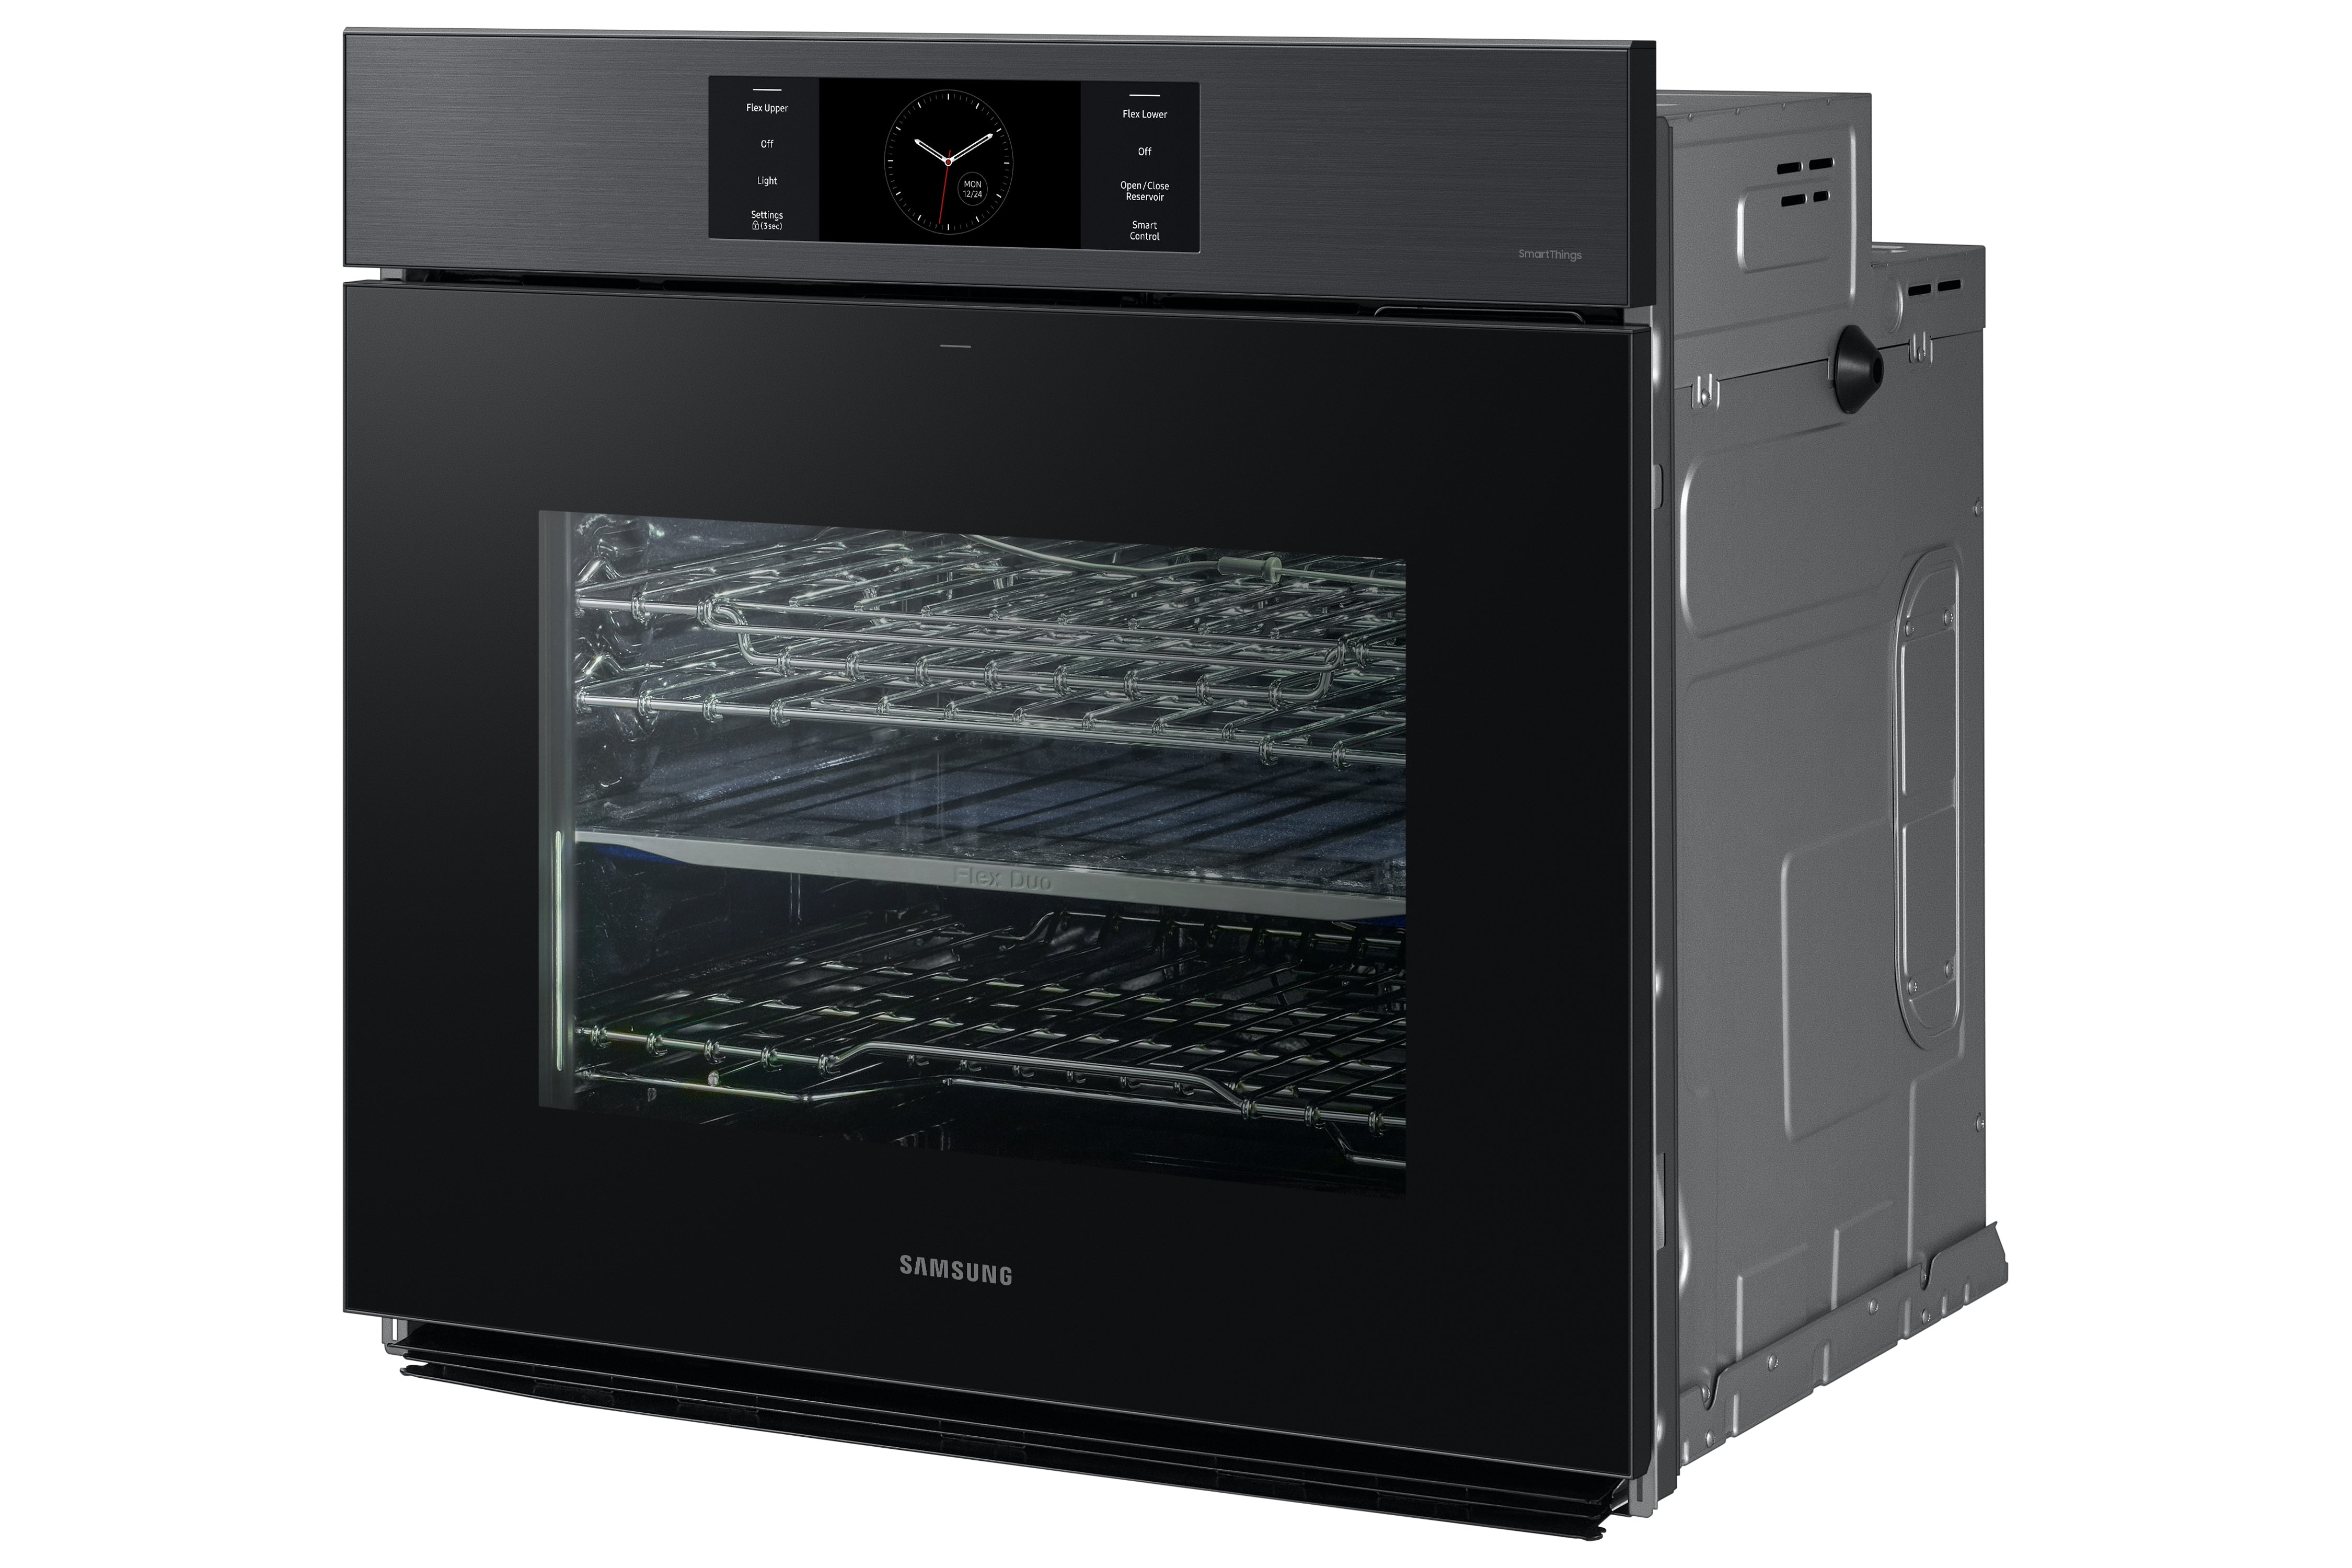 Samsung - 5.1 cu. ft Single Wall Oven in Black - NV51CG700SMTAA